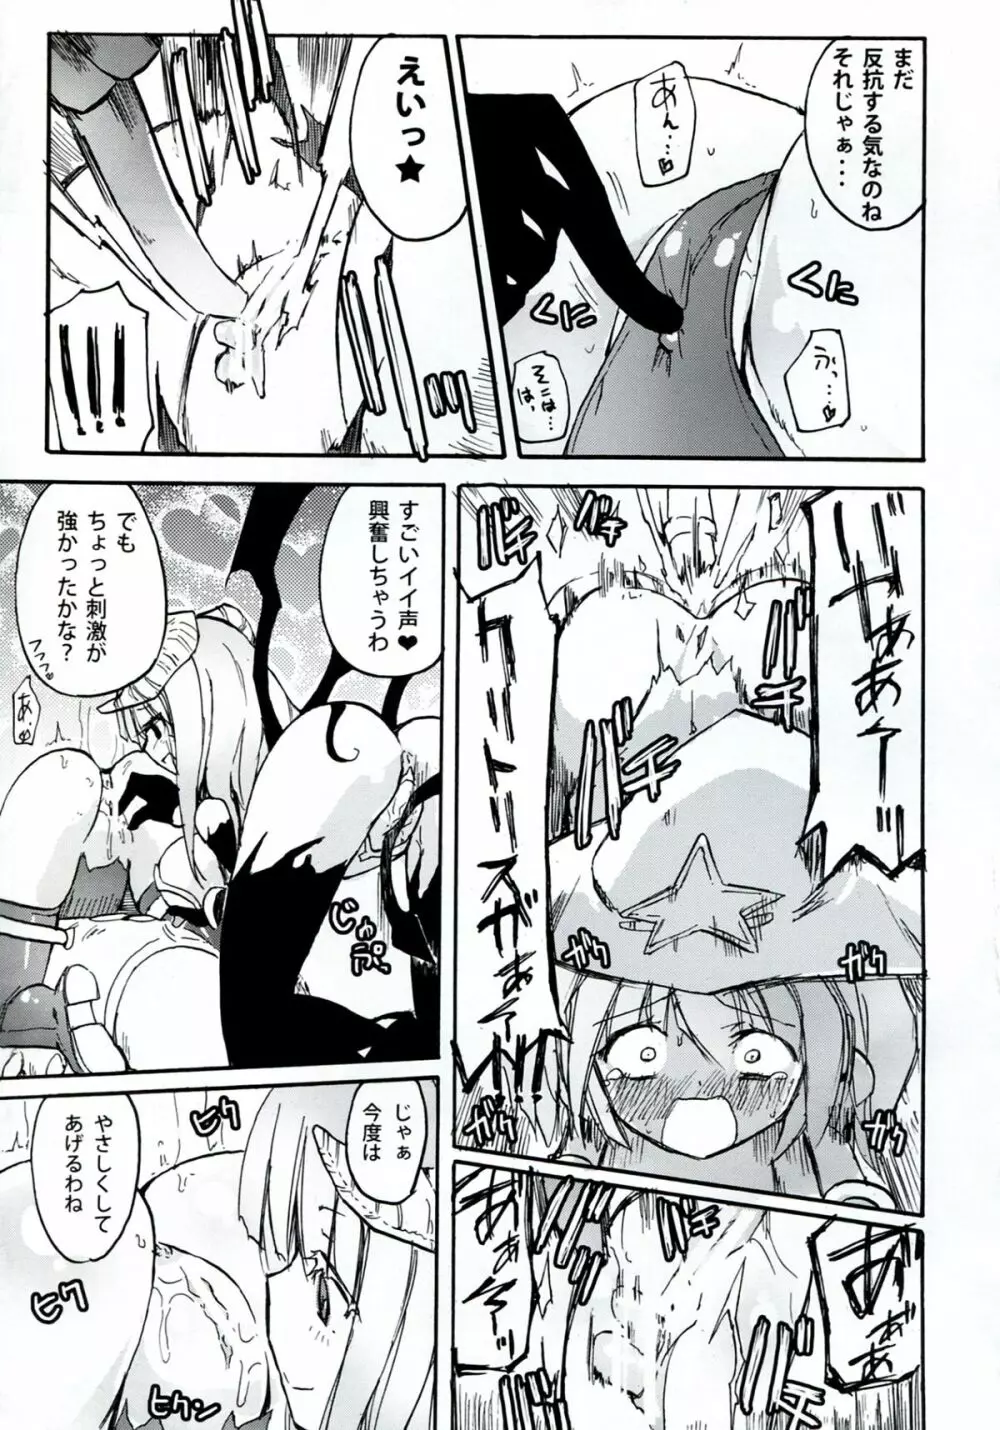 Homuraya Milk ★ Collection 2 - page45